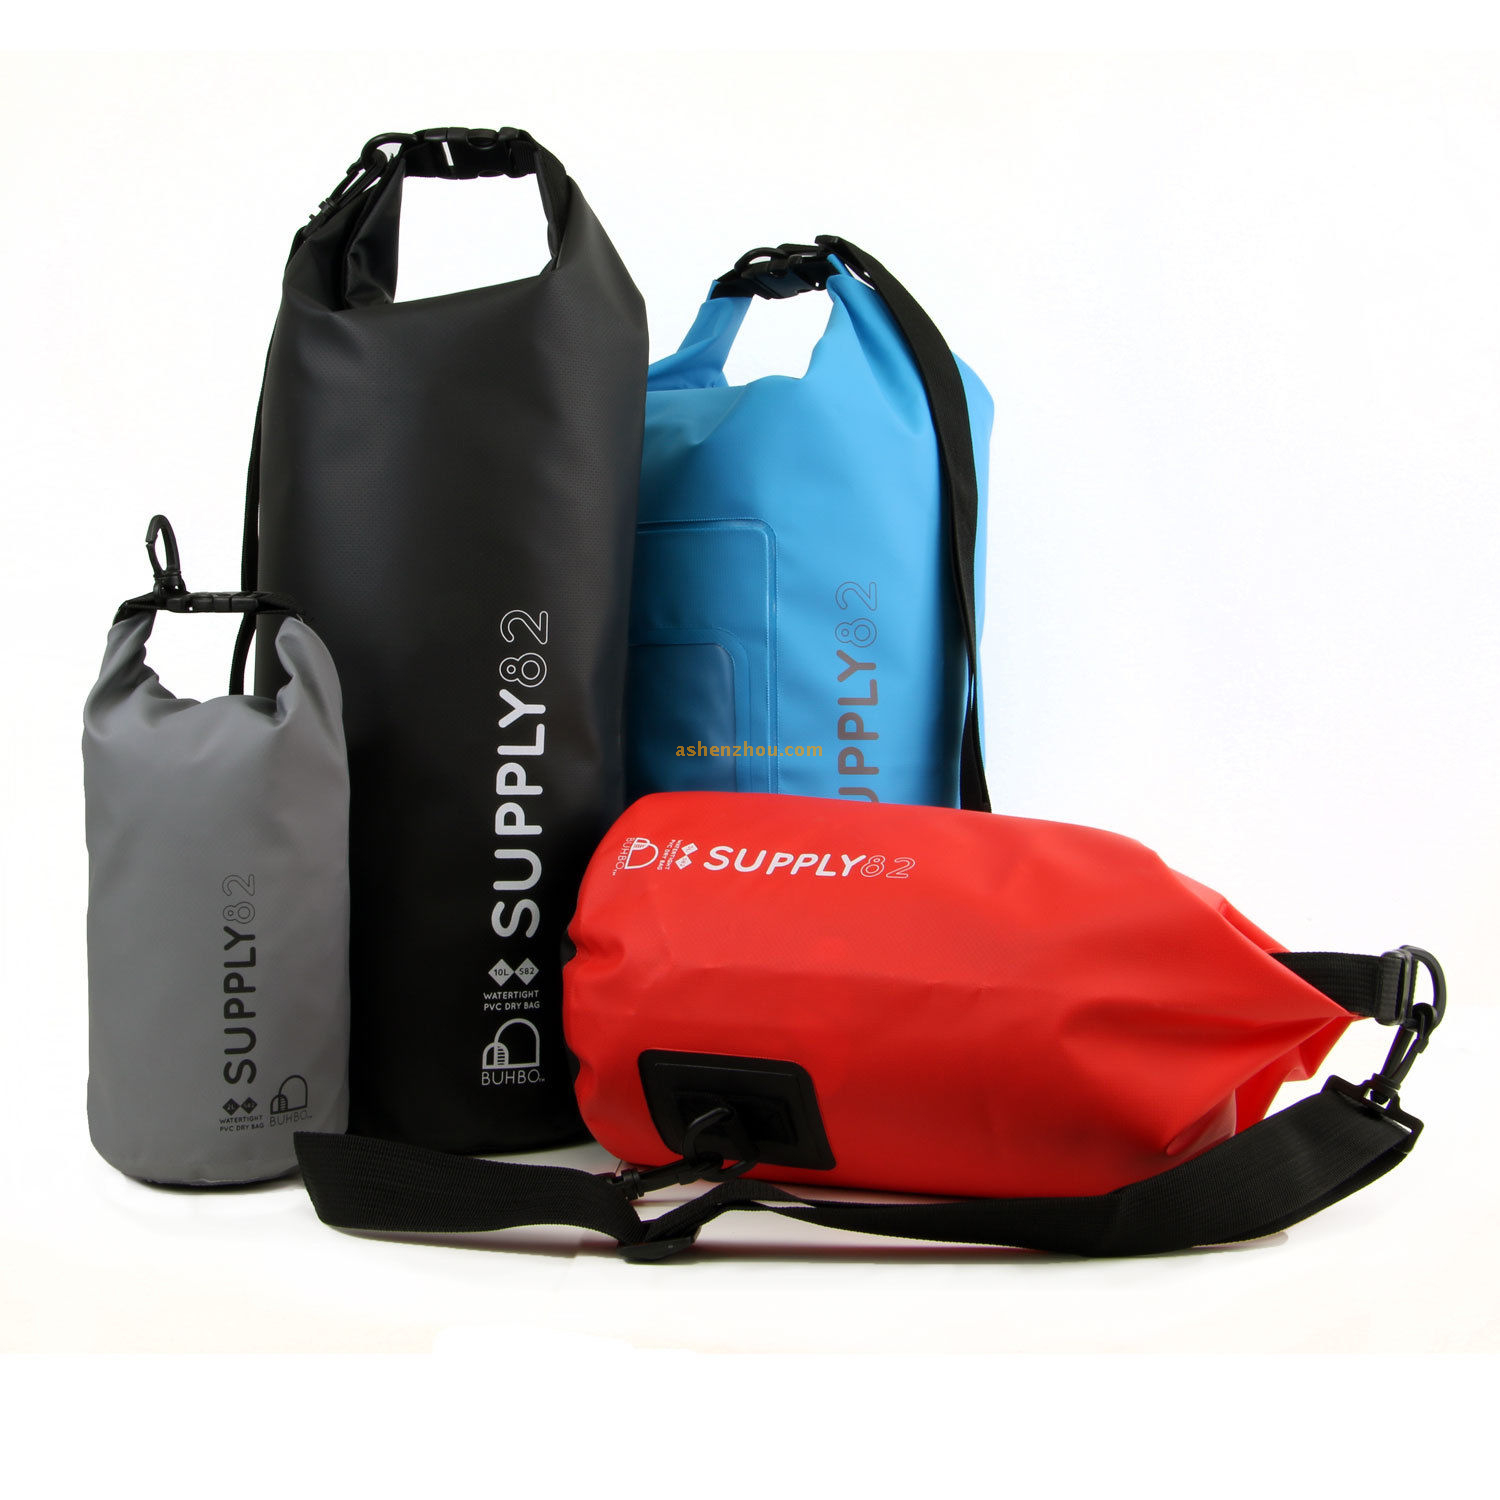 PVC waterproof ocean pack dry bag, custom waterproof dry bag with handle and strap for outdoor sports